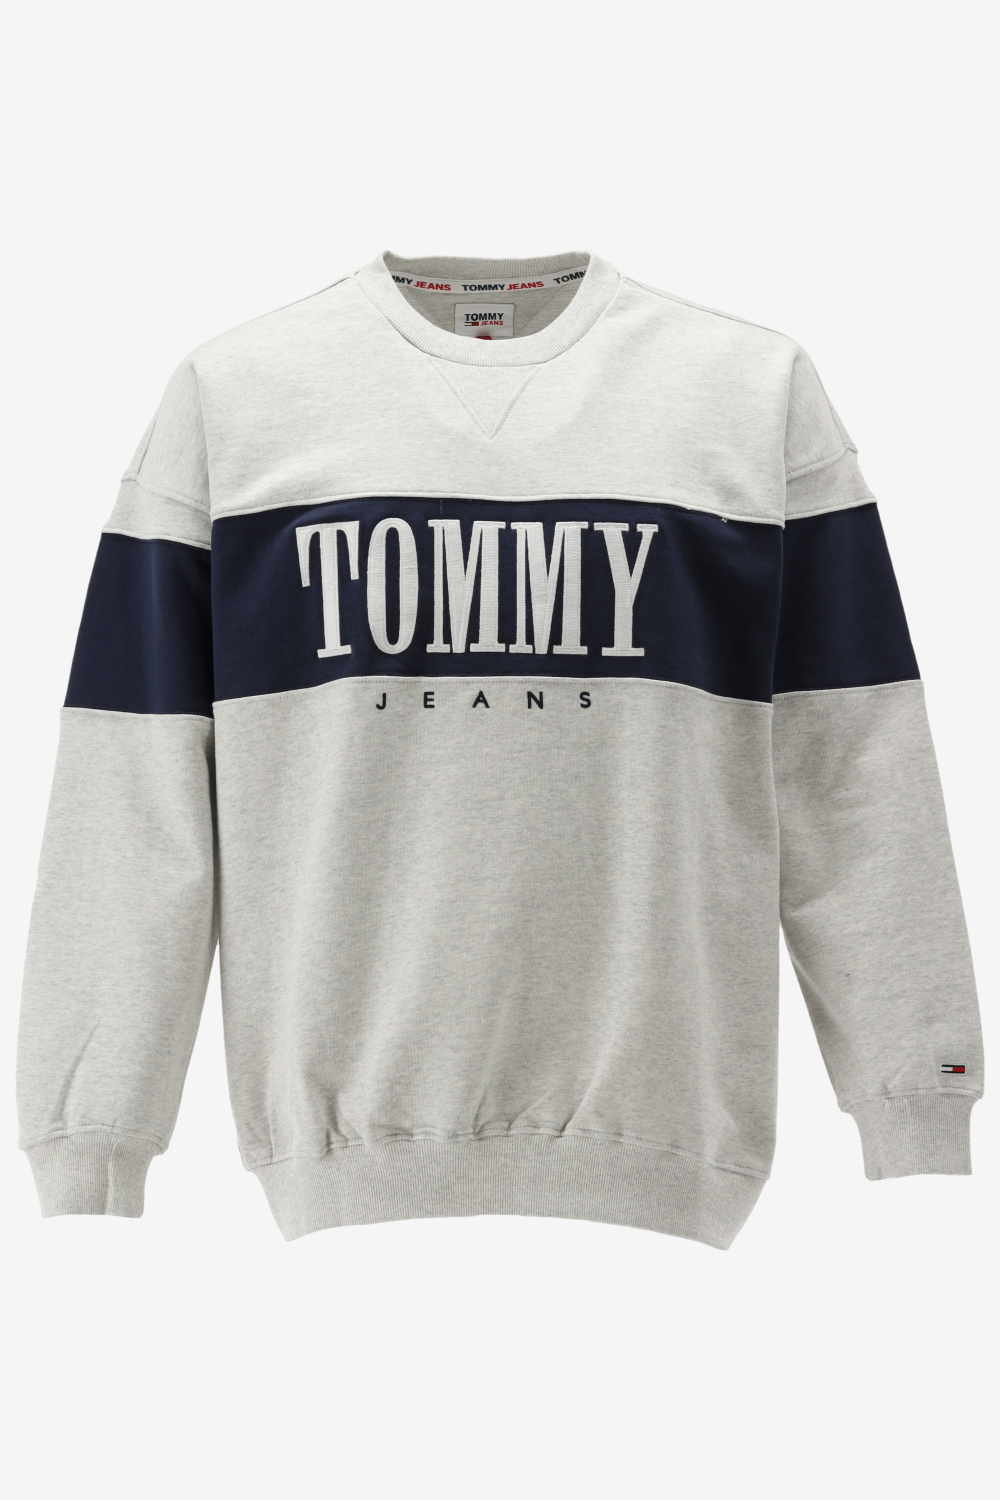 Tommy Jeans Sweater - Regular Fit - Grijs - S